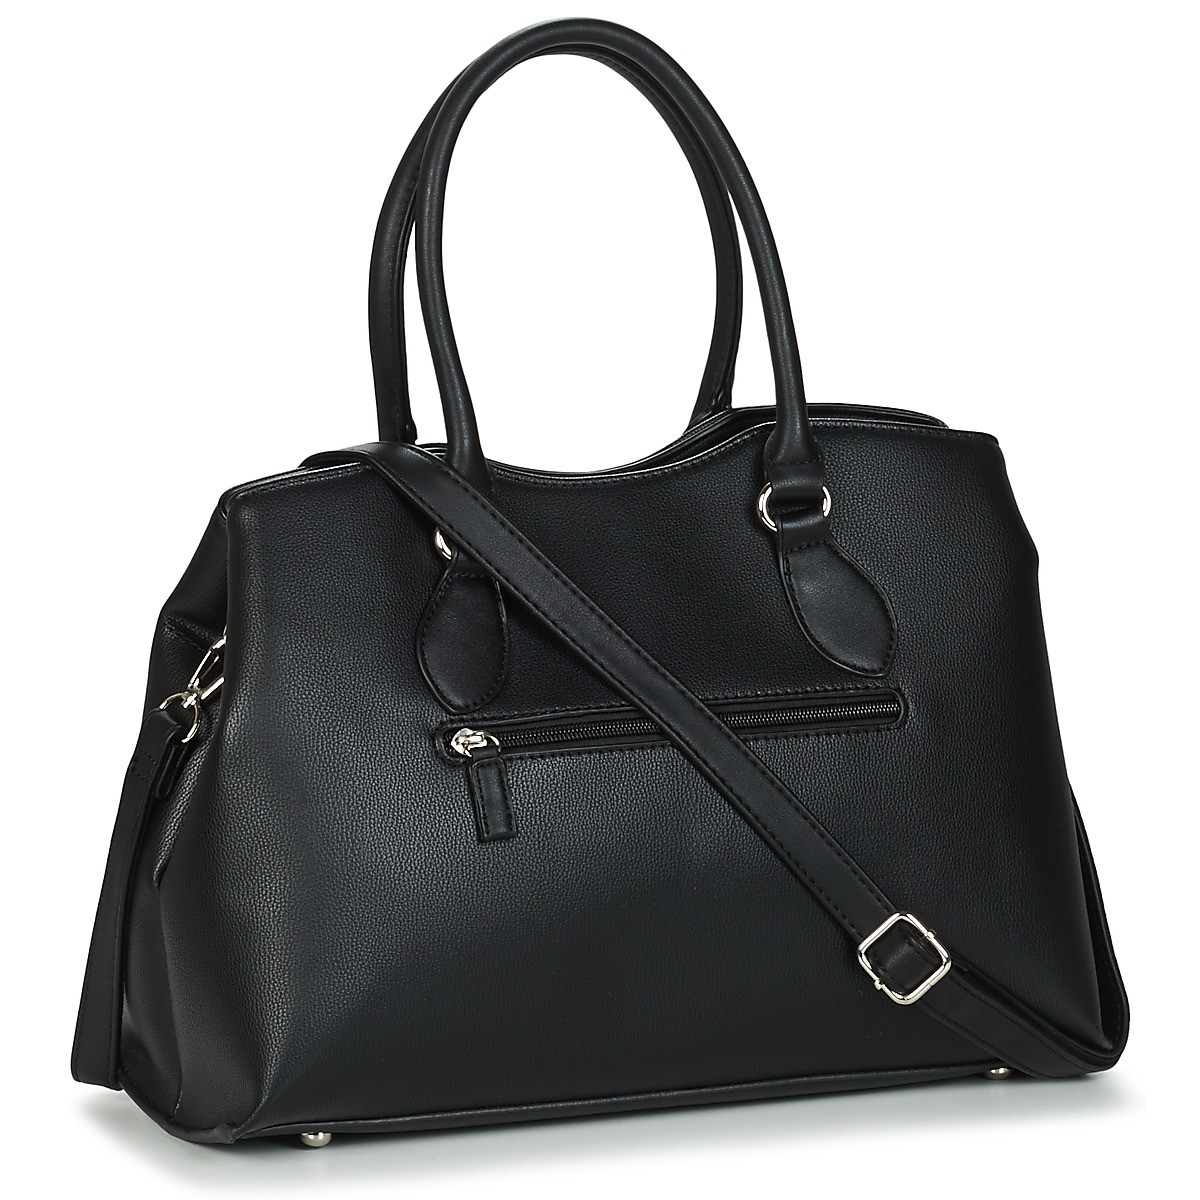 designer david jones handbags paris > Boutique Handbags > Mezon Handbags